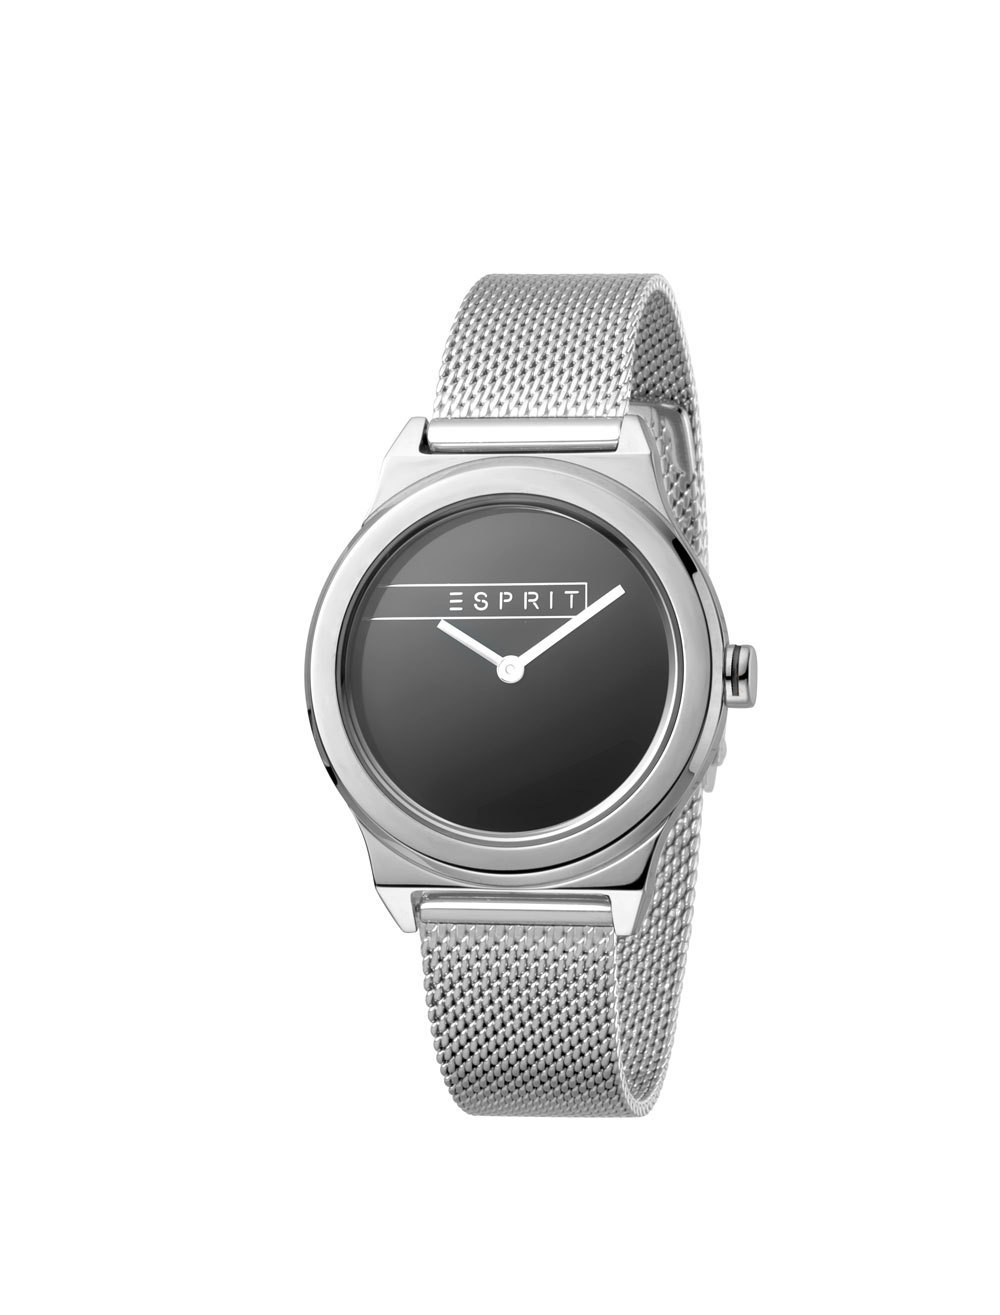 Esprit ES1L019M0065 Magnolia Black Silver horloge